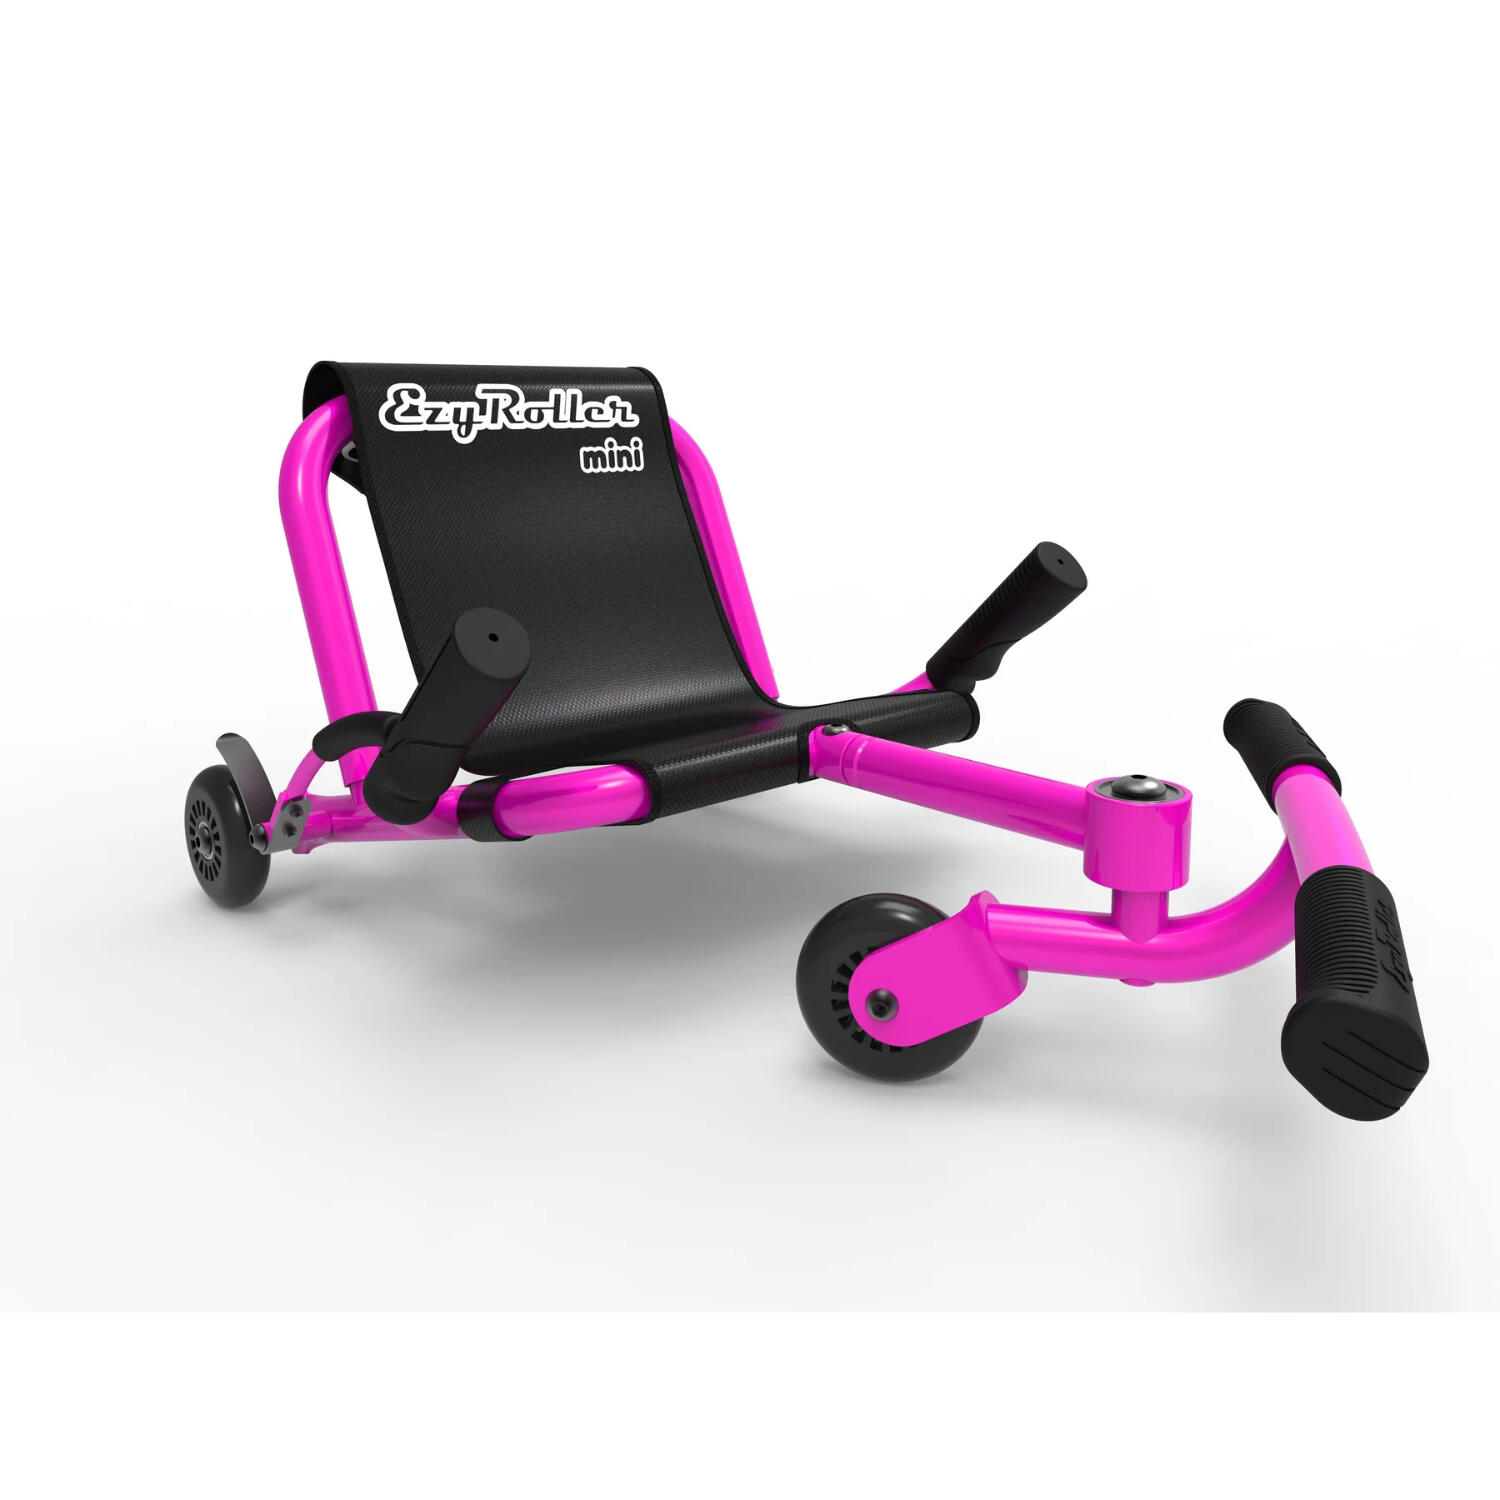 EZYROLLER EzyRoller Mini Ride On - Pink